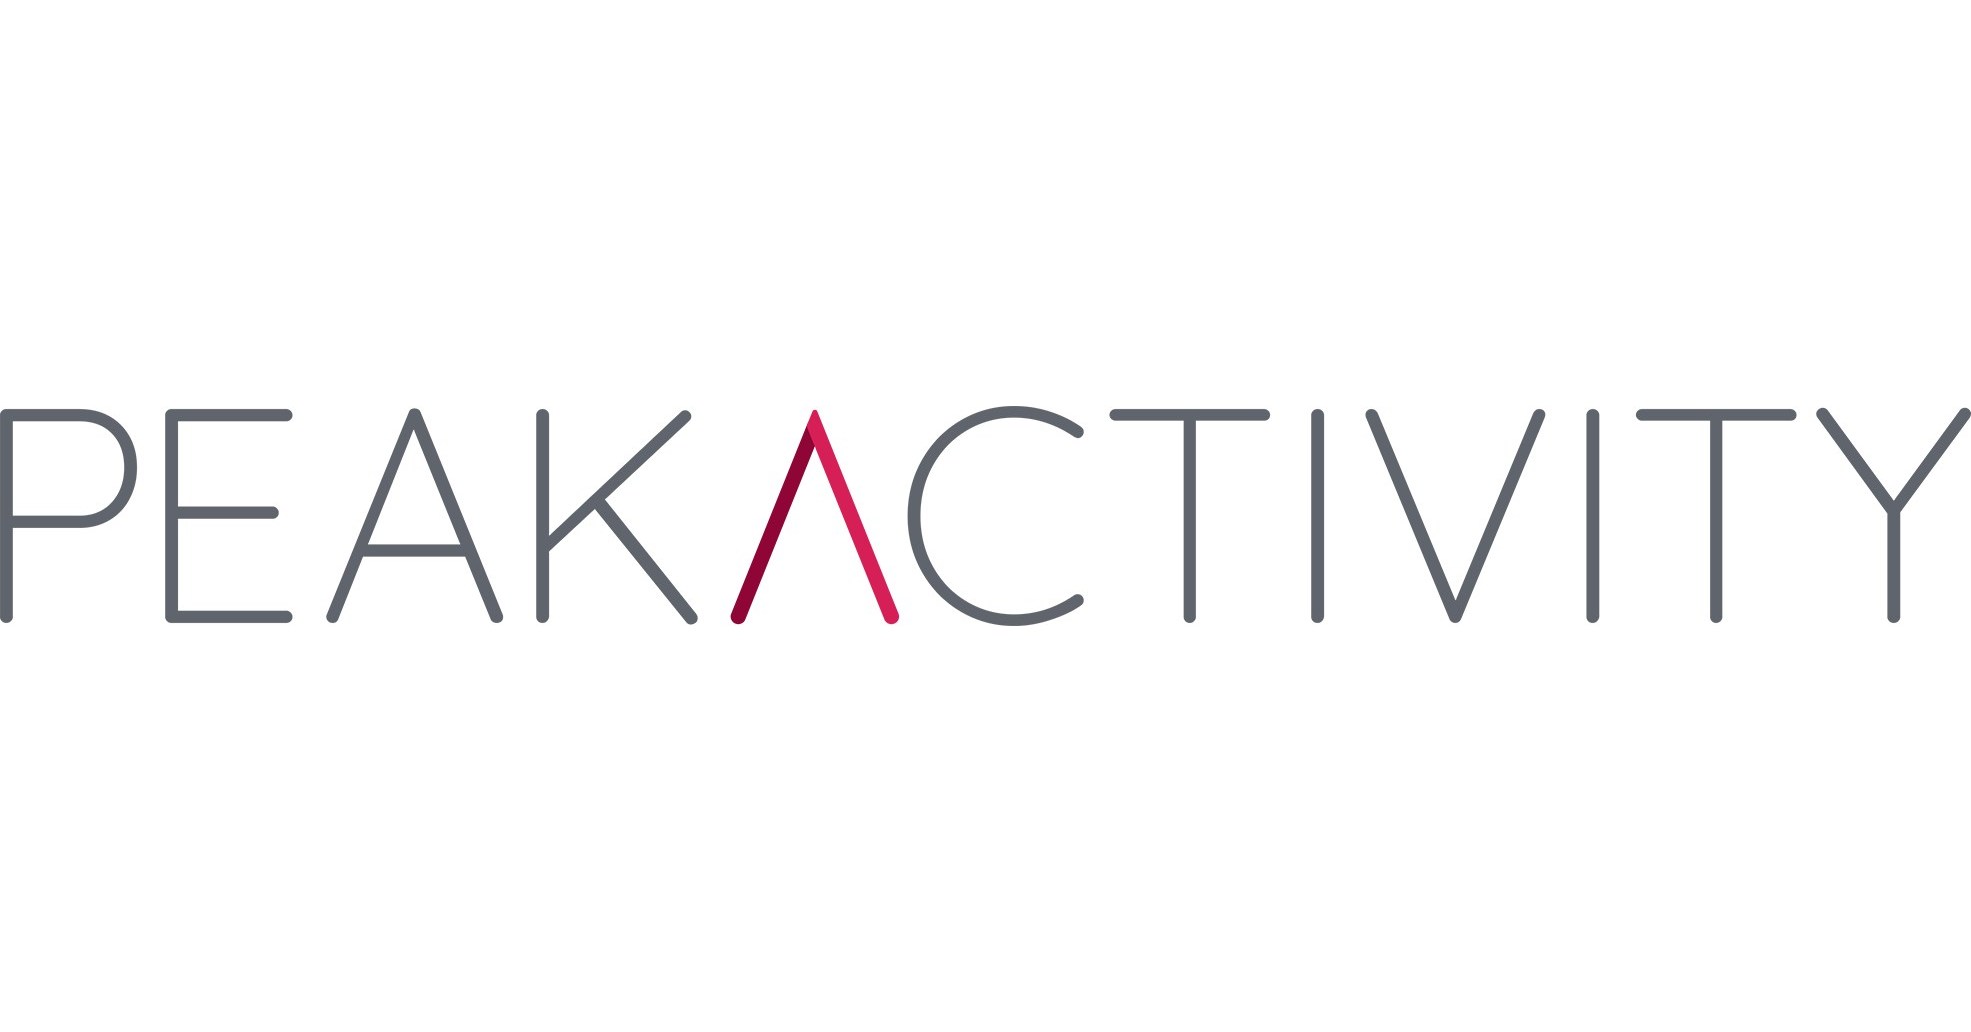 PeakActivity Becomes Certified Implementation Partner for BigCommerce